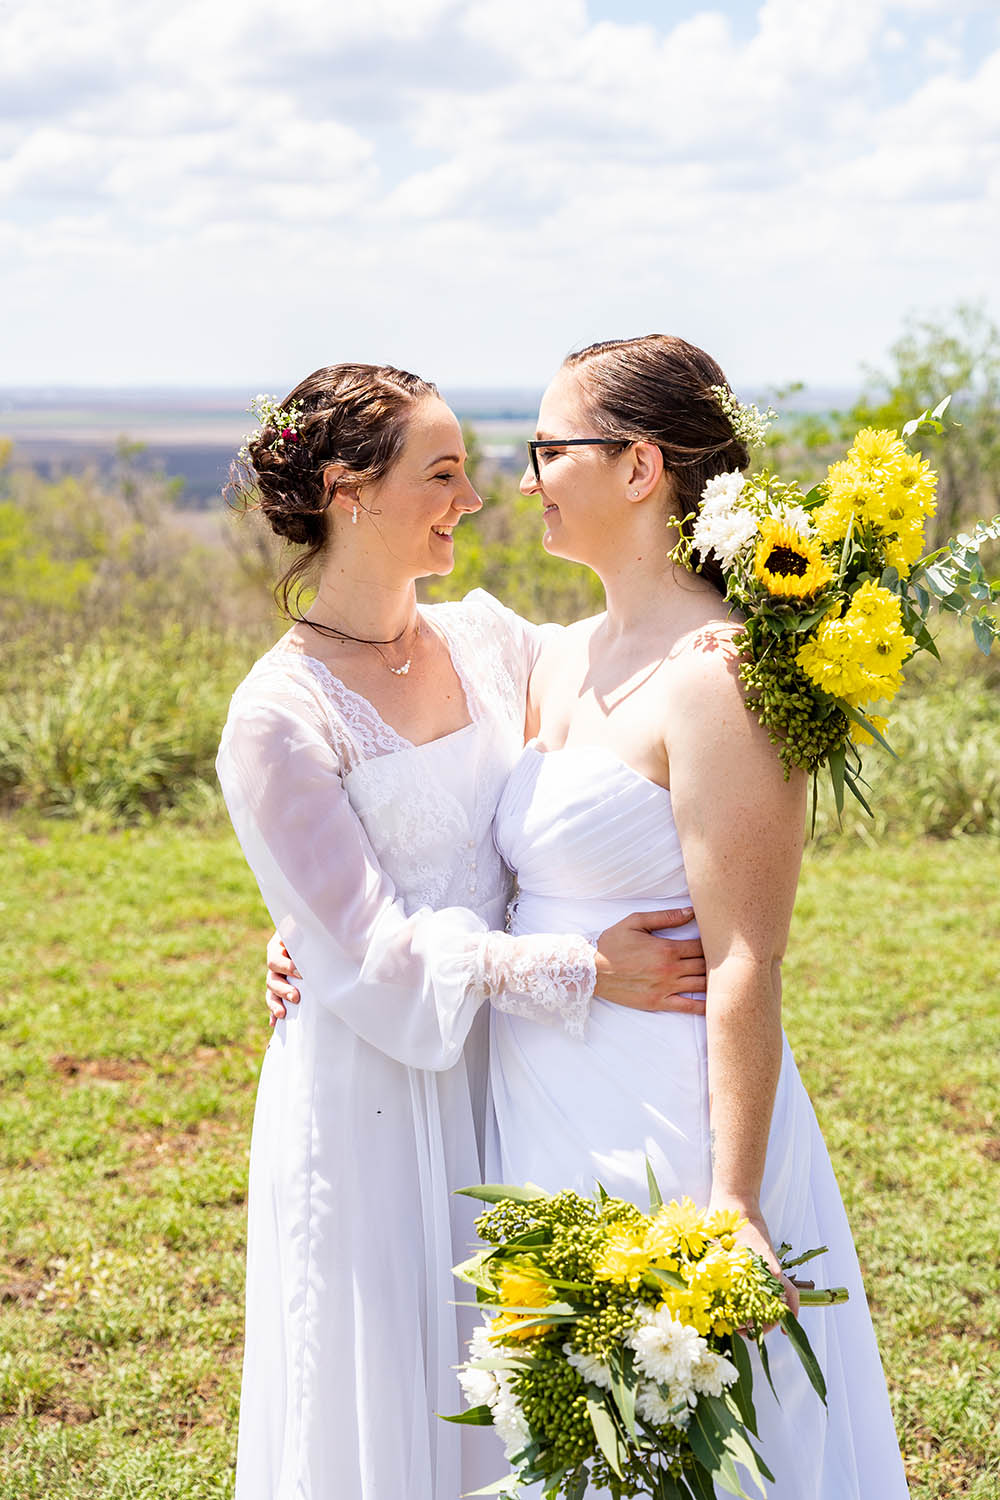 Wedding Photography - Embracing Brides